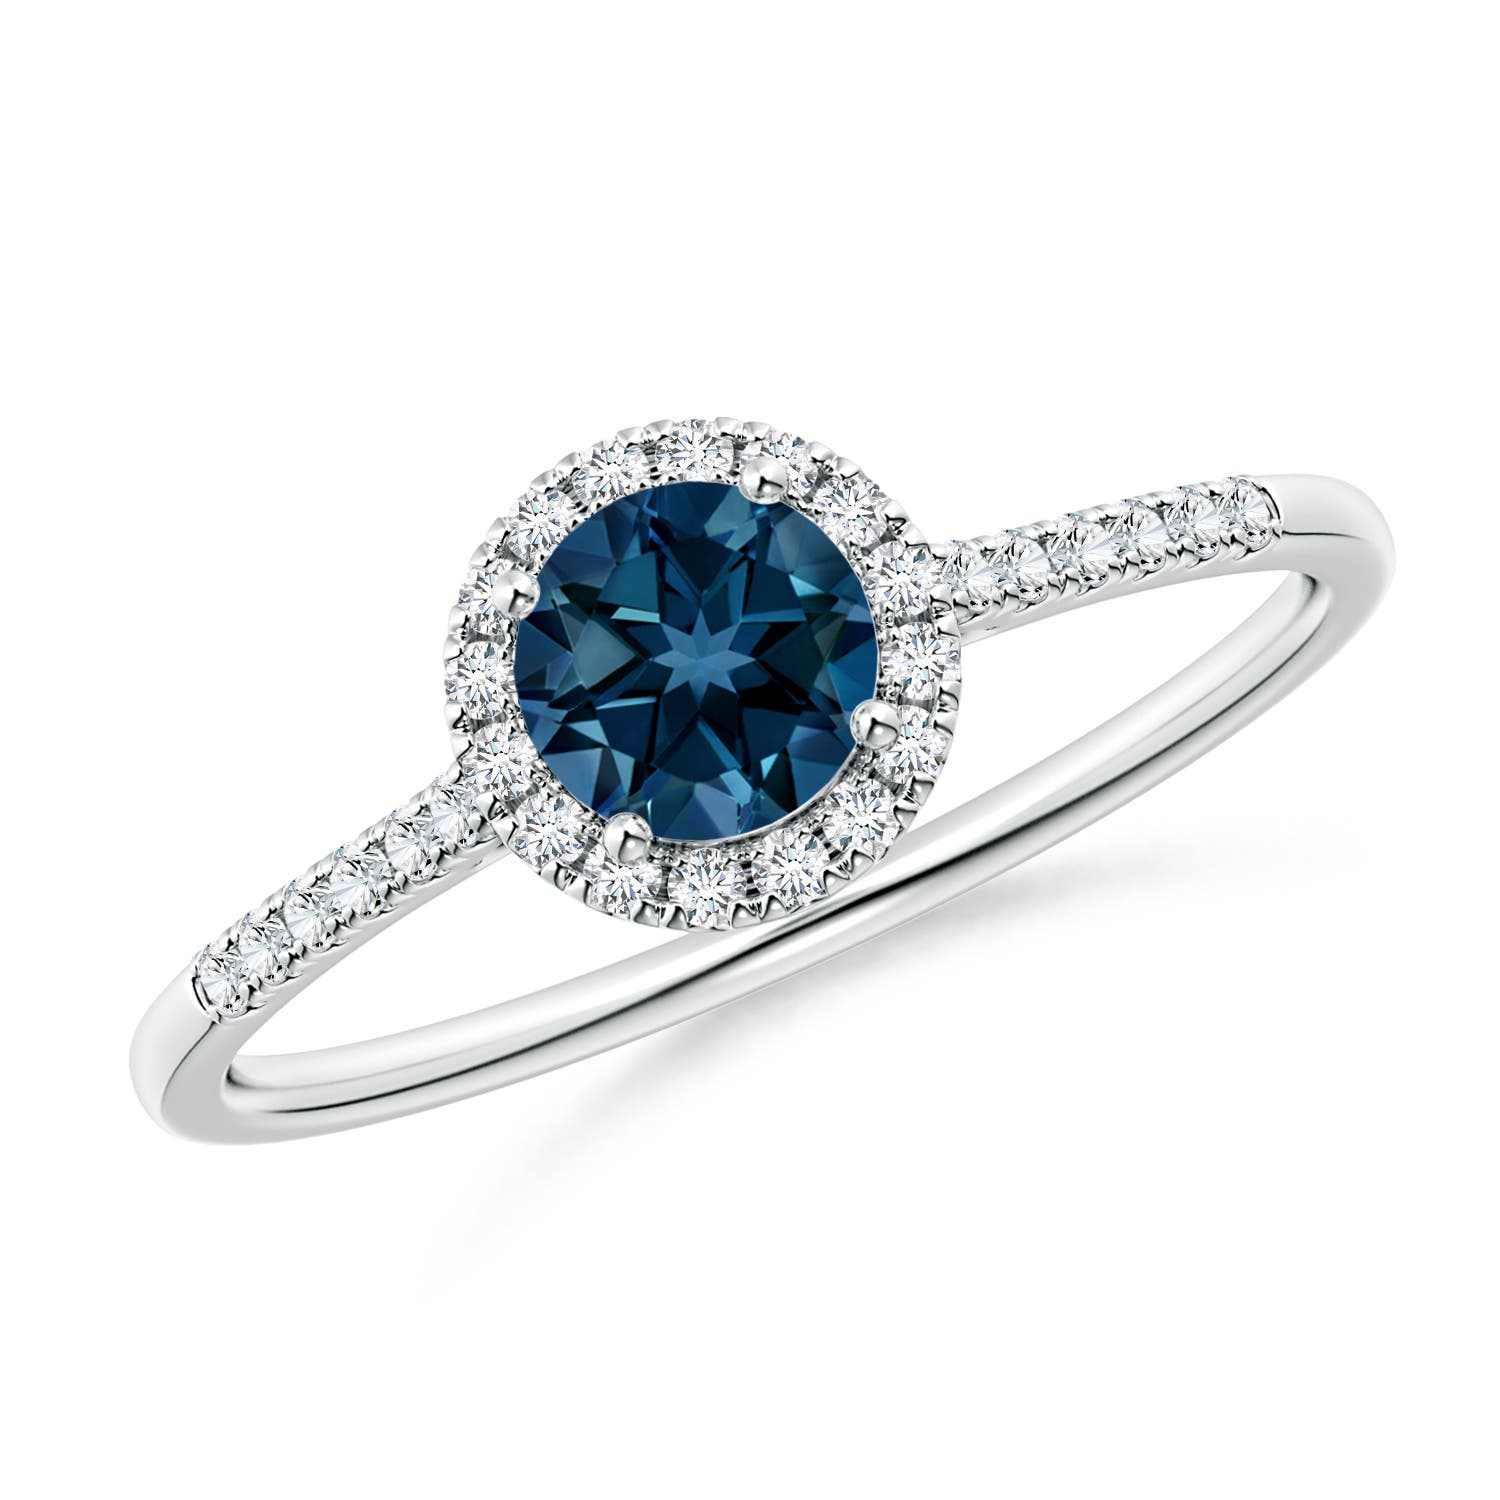 Round London Blue Topaz Halo Ring with Diamond Accents | Angara